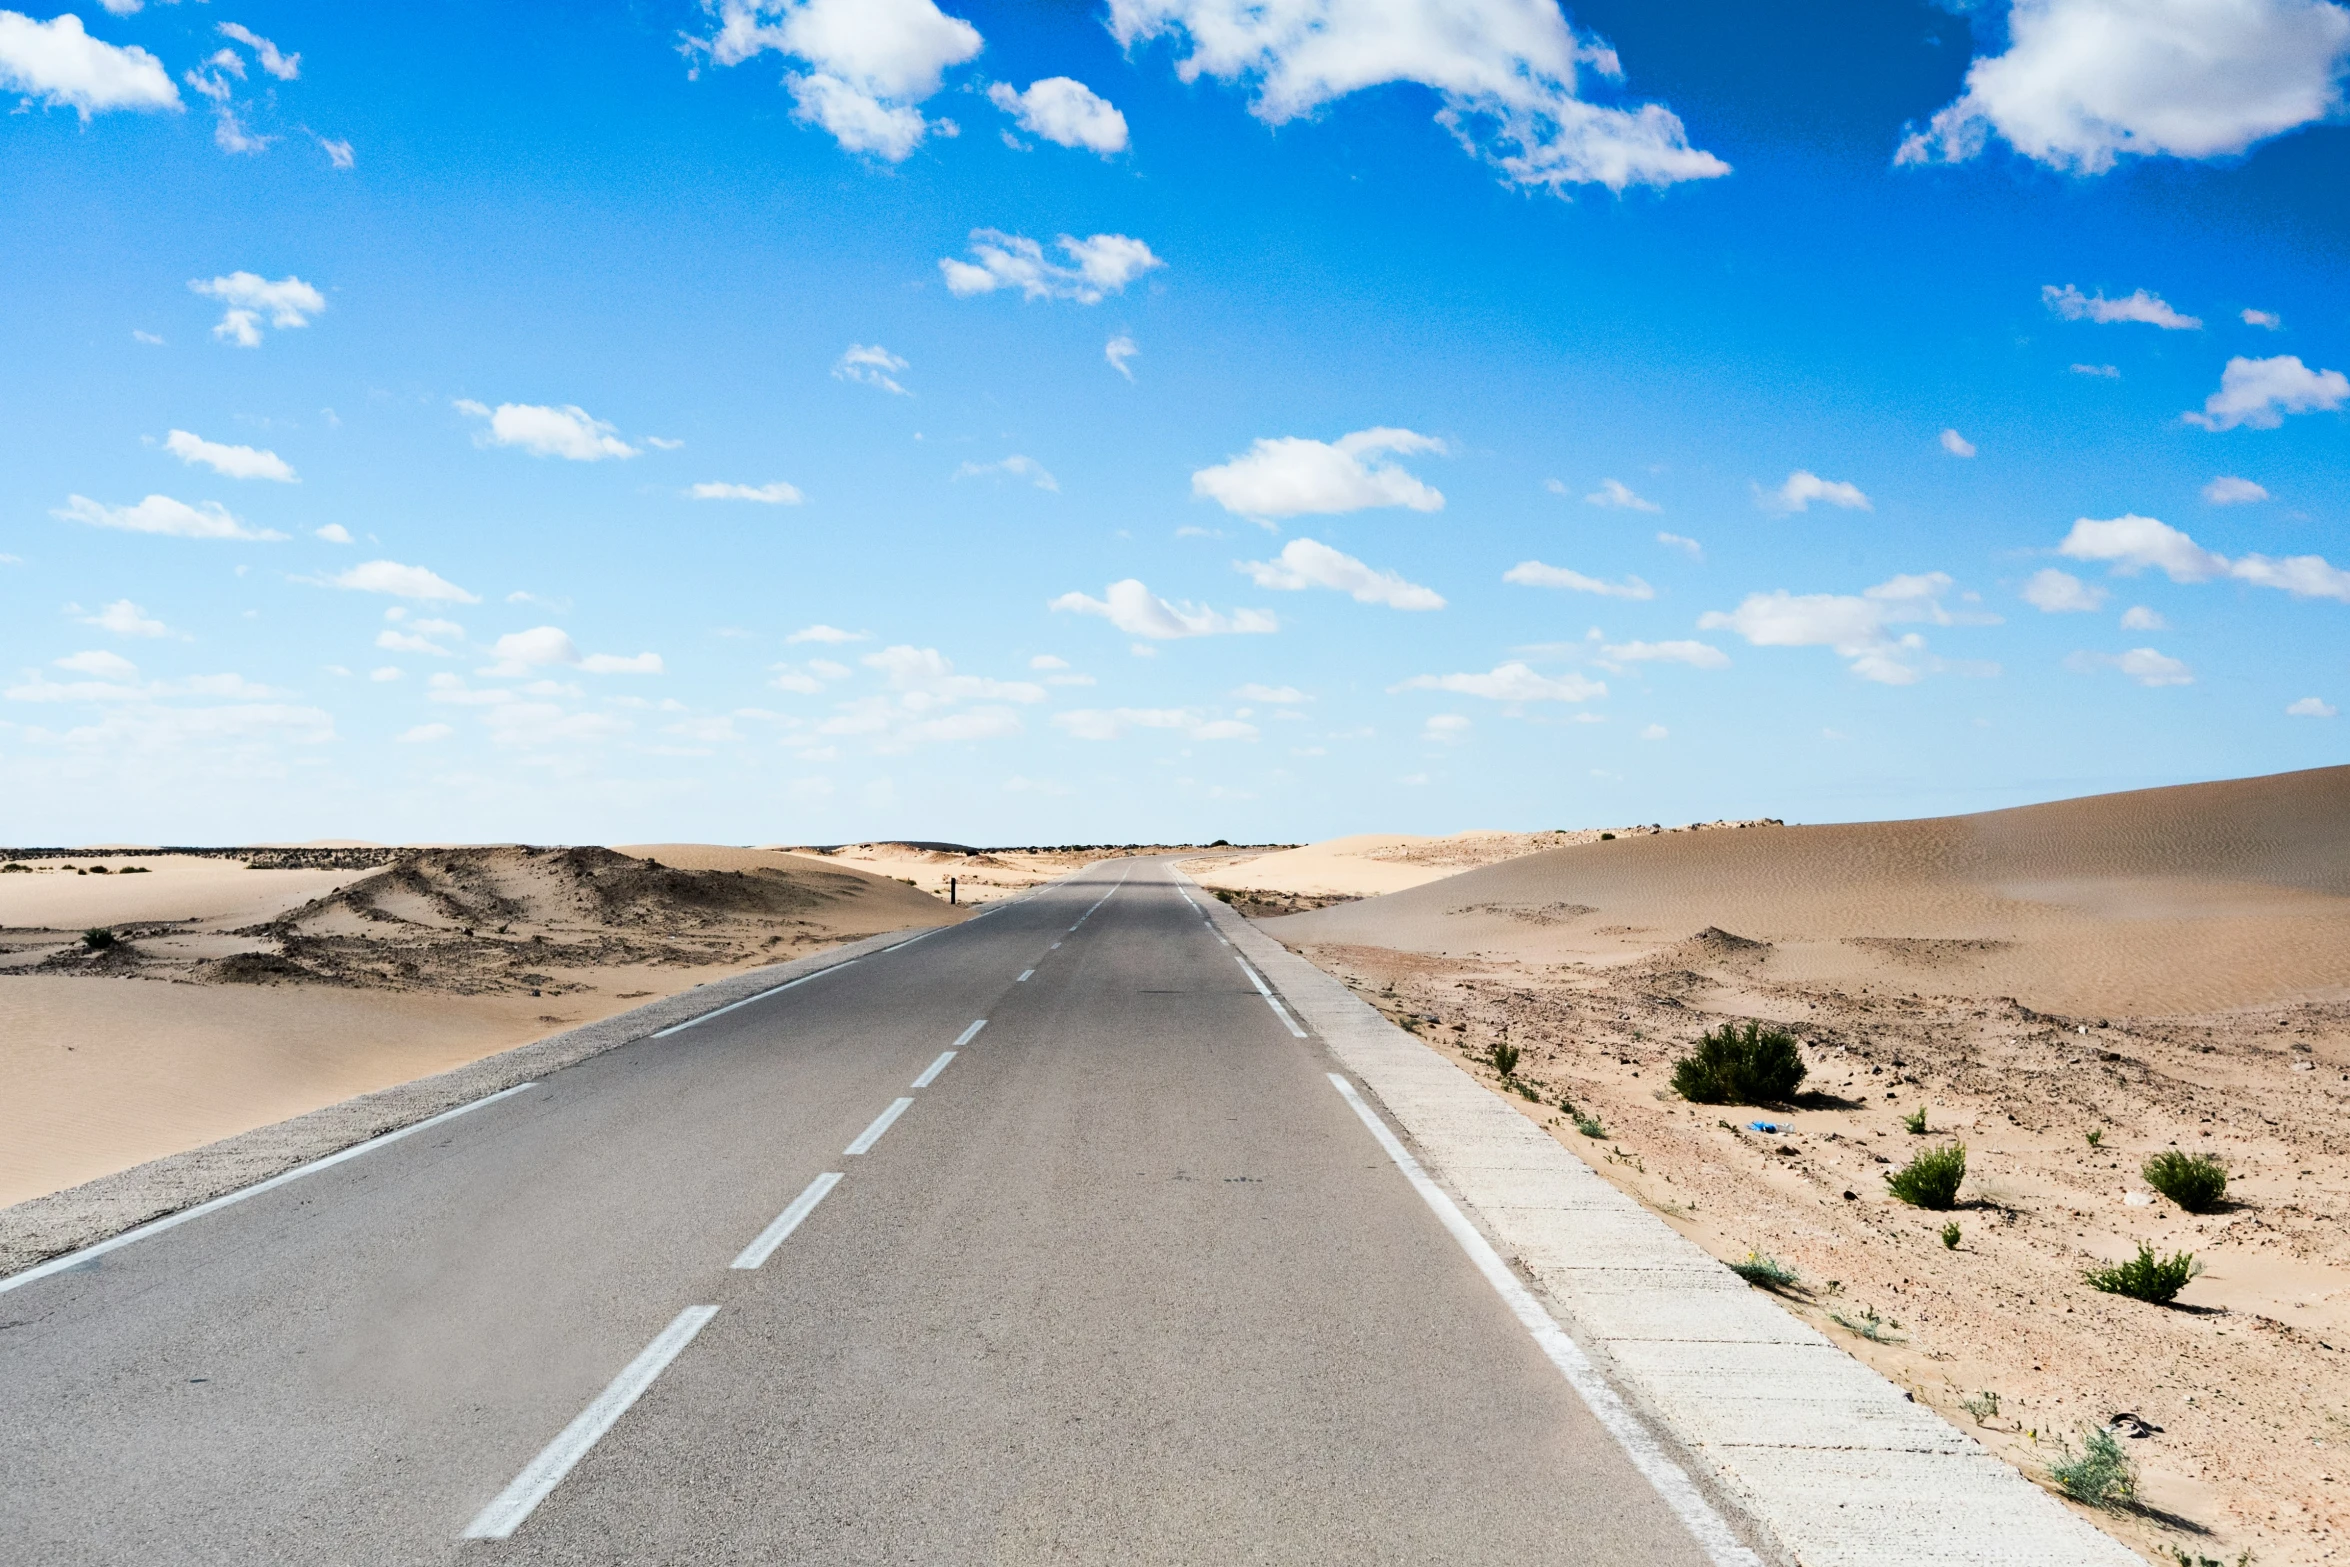 the road stretches through the desert through scrubland